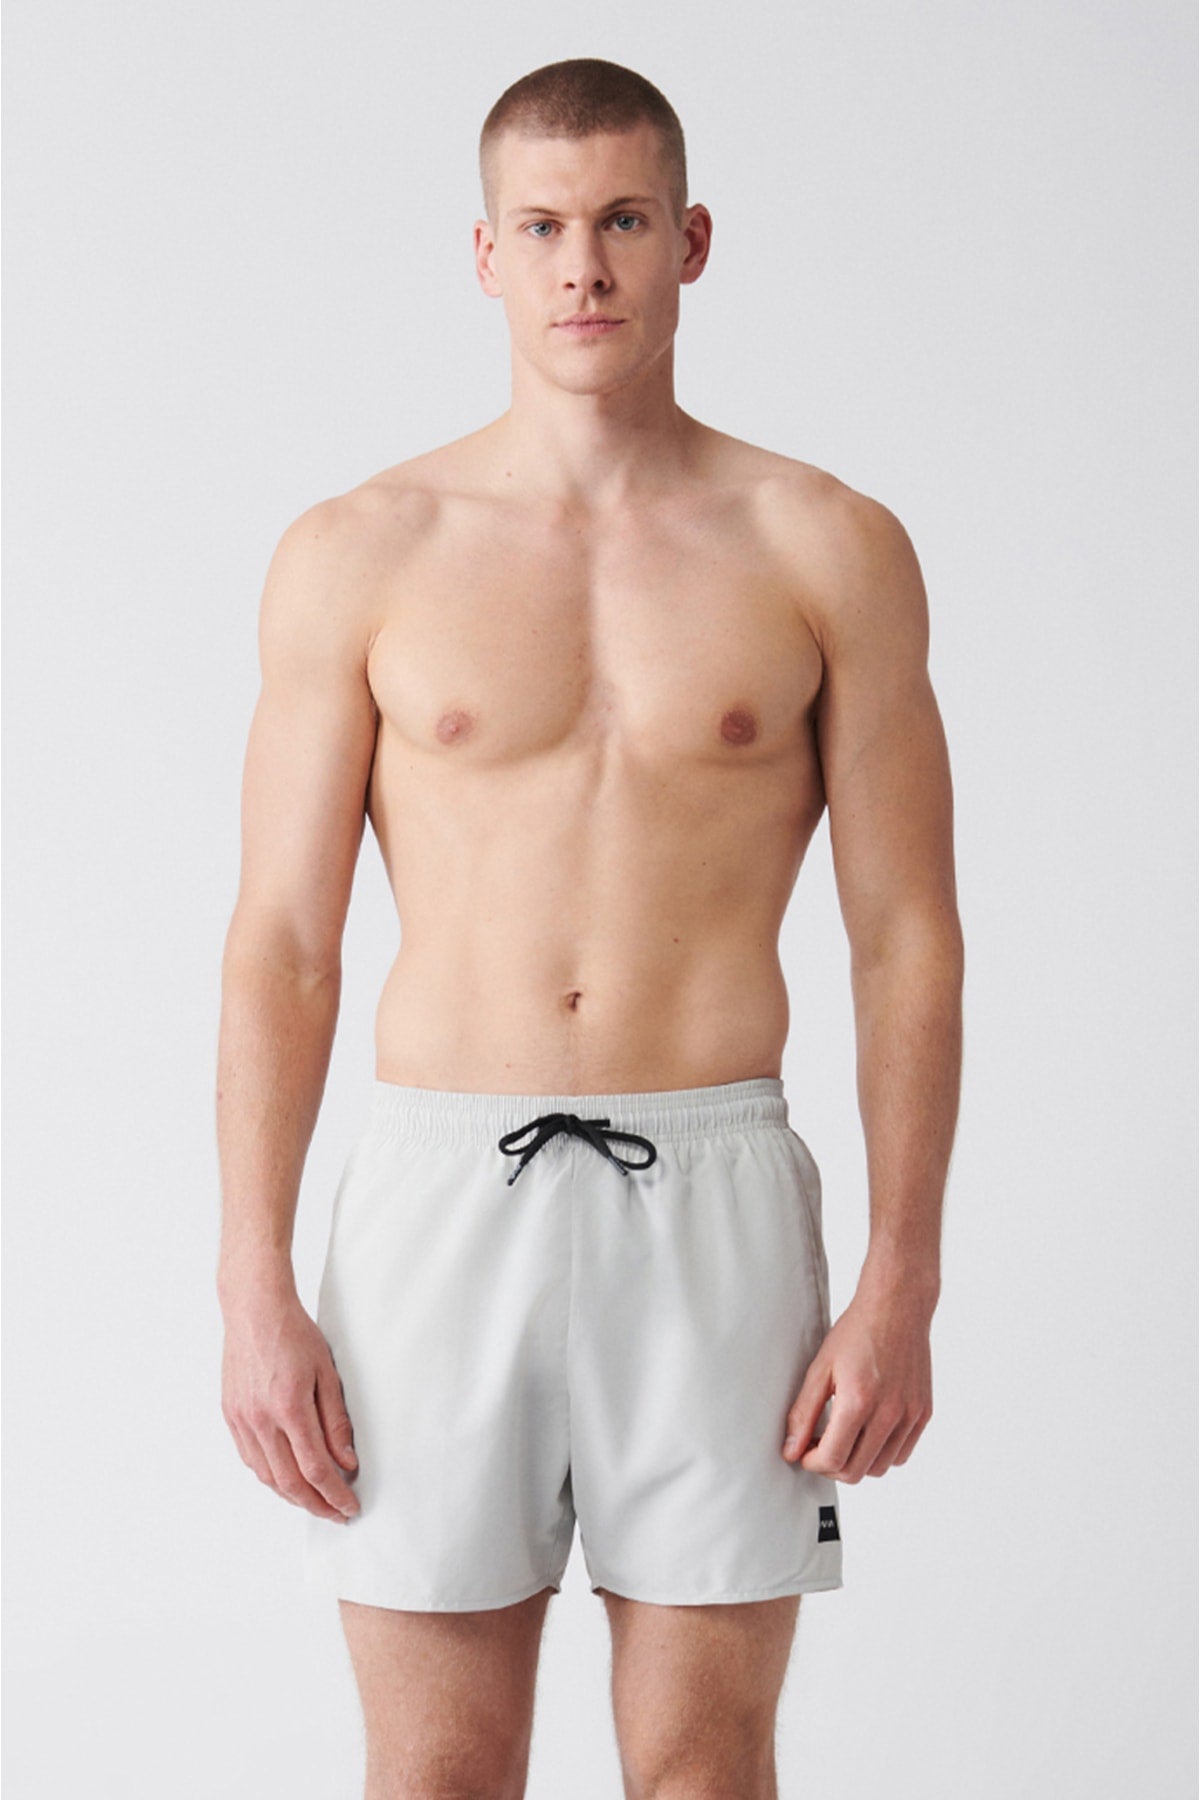 Men's Gray Quick Dry Standard Size Straight Swimwear Marine Shorts E003801